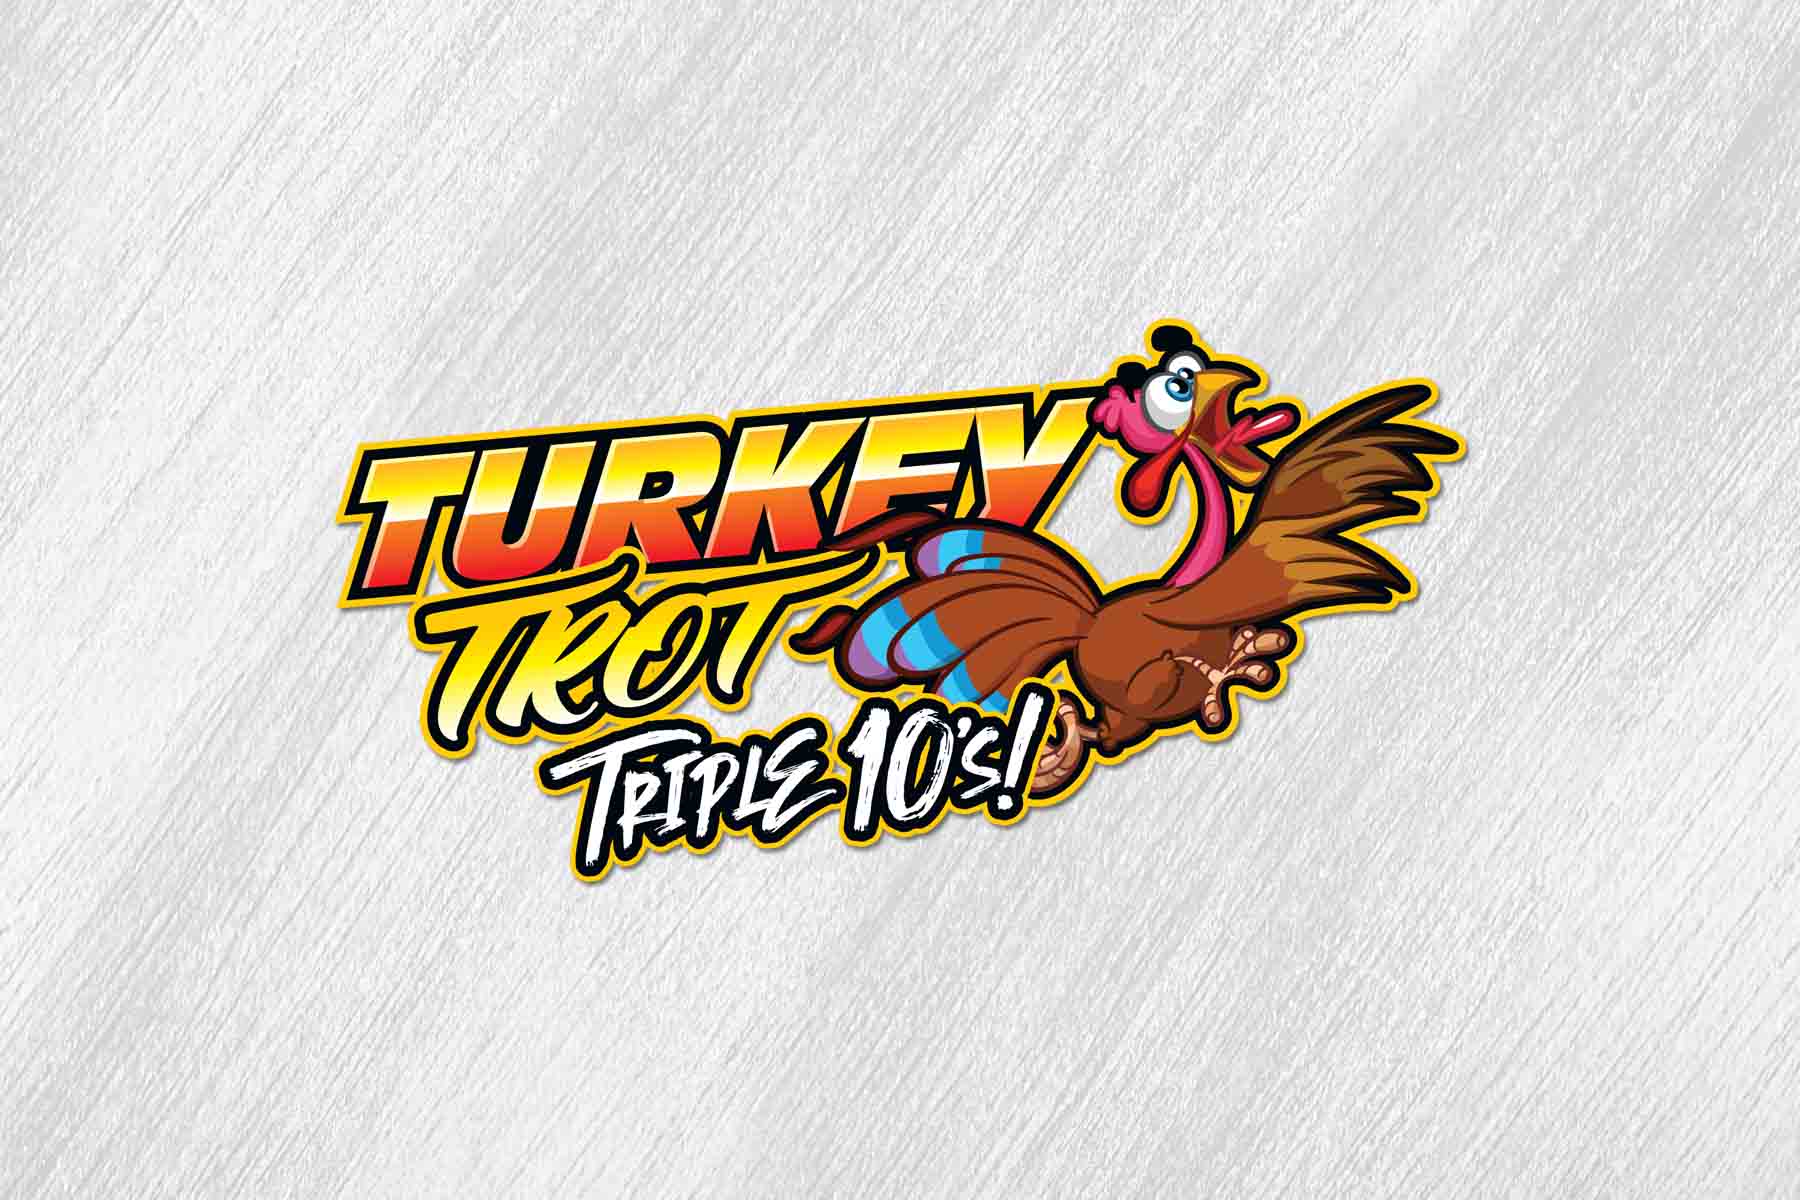 Turkey Trot Triple 10s Virginia Motorsports Park